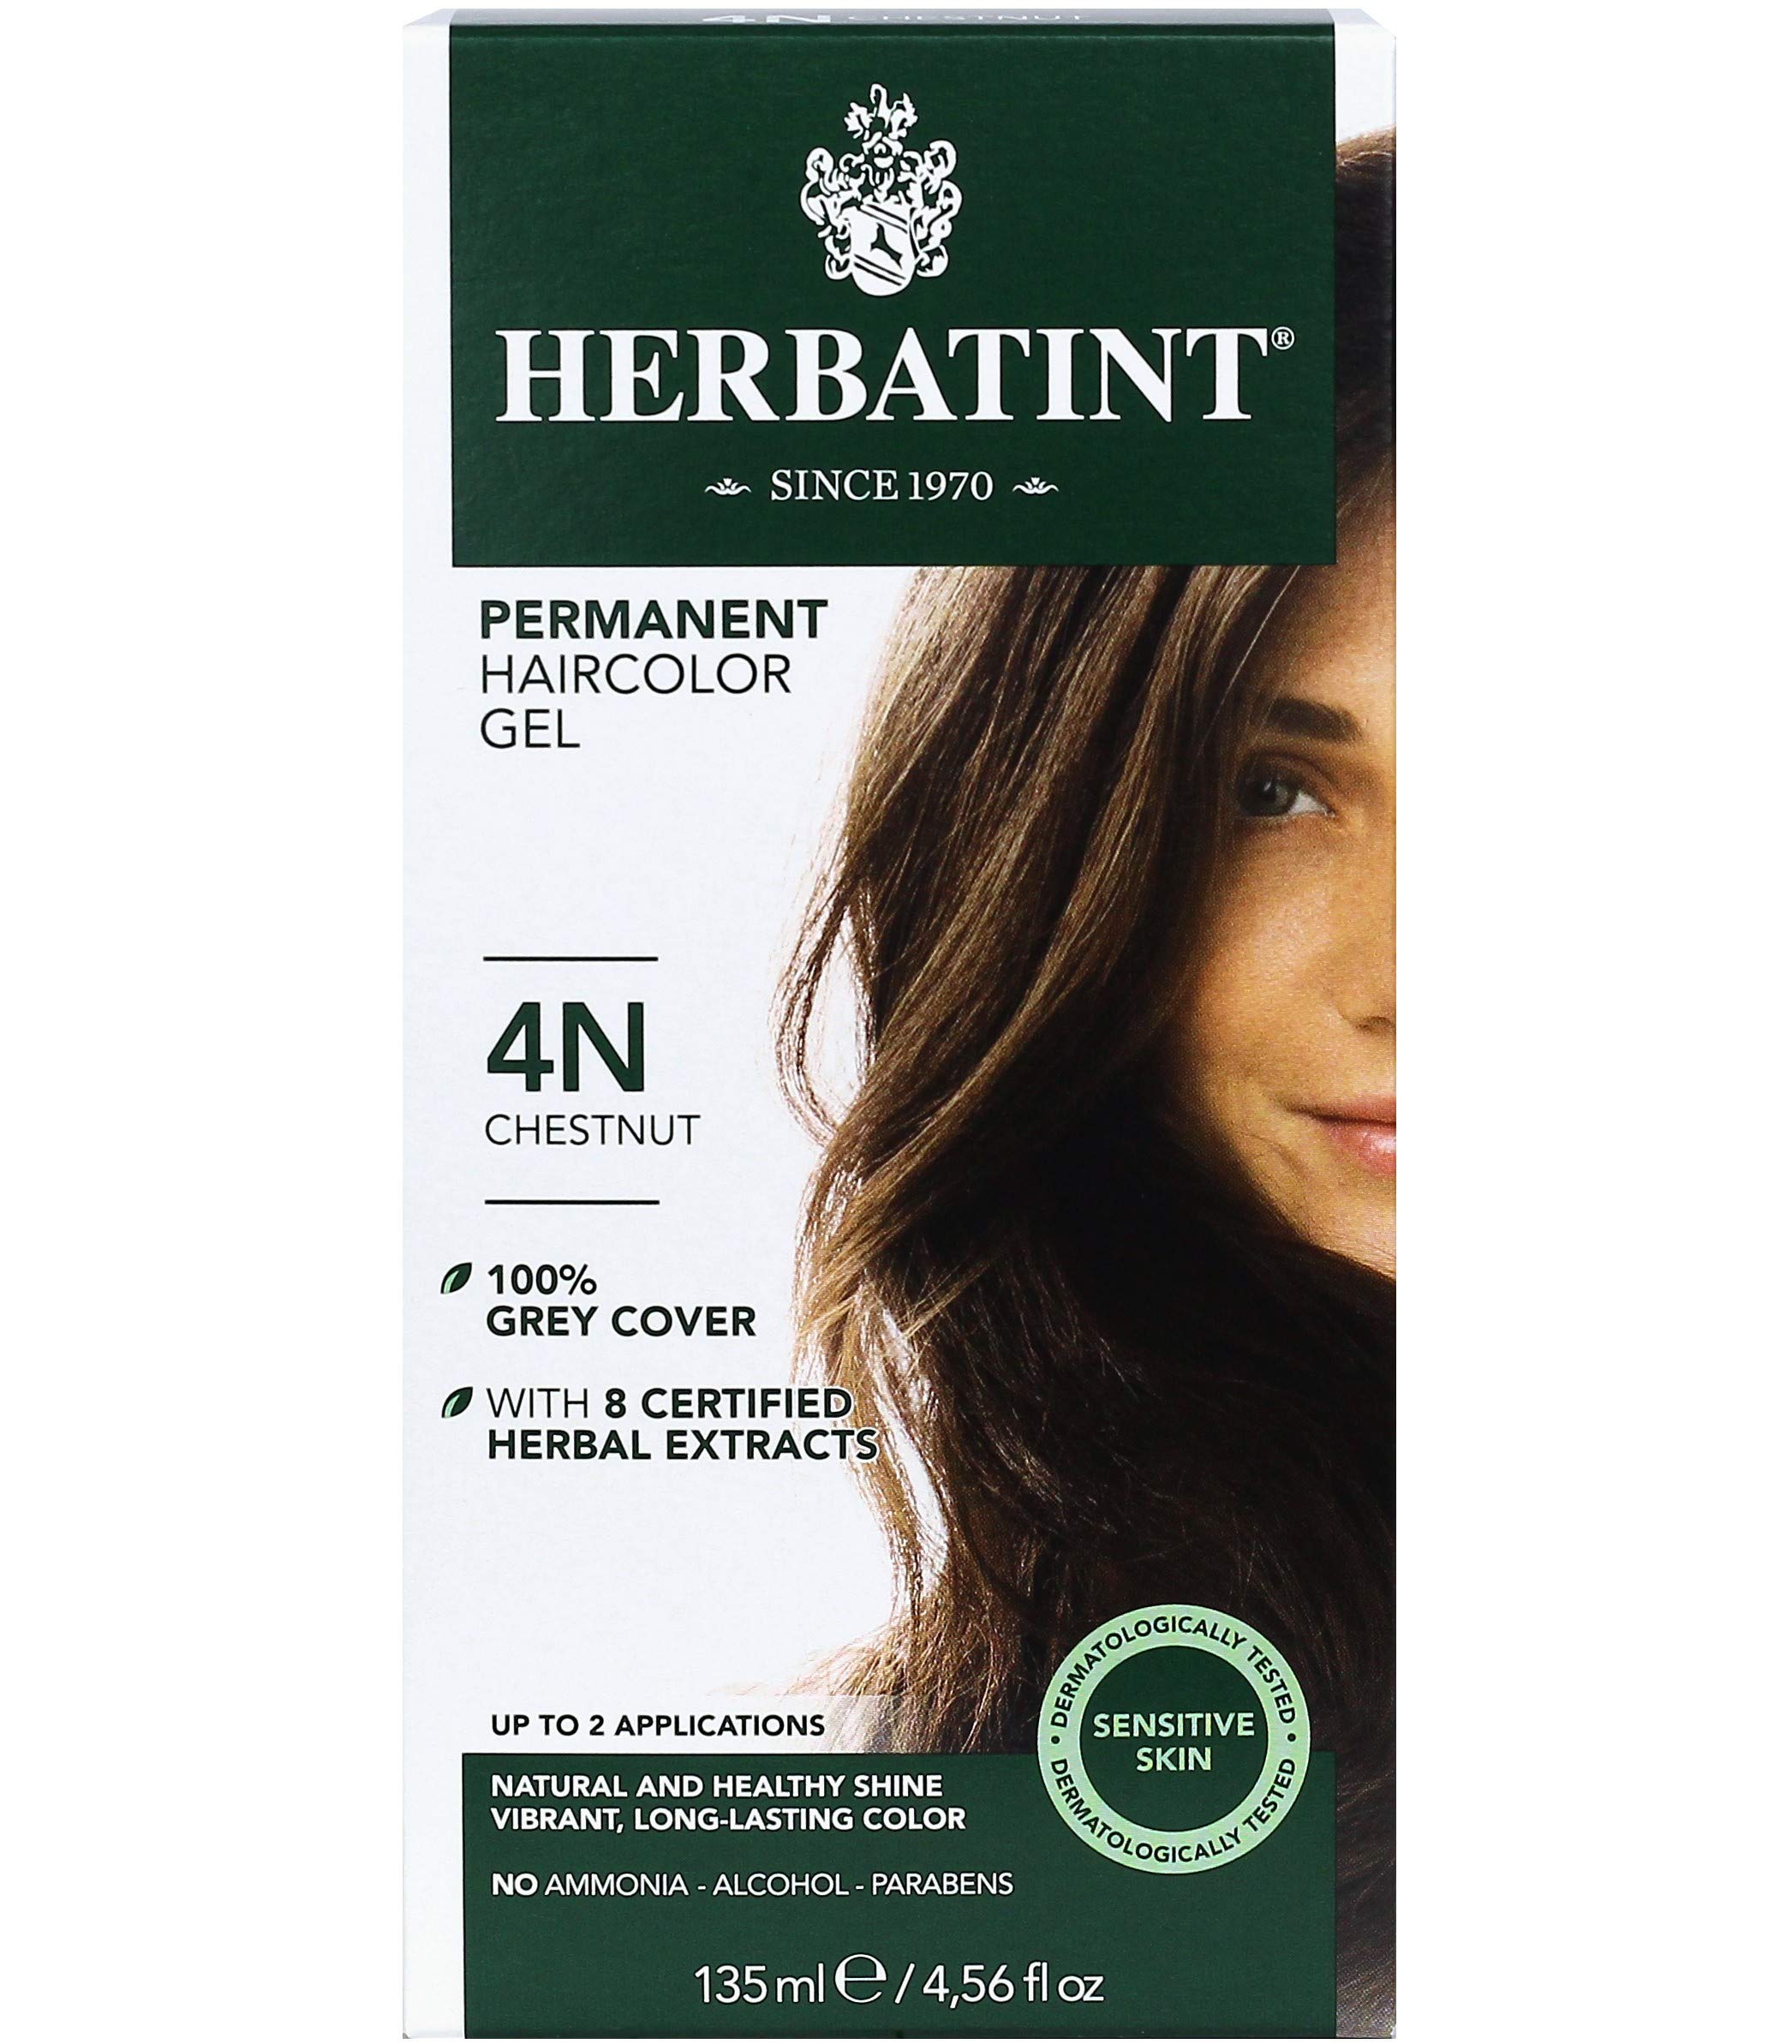 Herbatint Permanent Haircolor Gel, 4N Chestnut, Alcohol Free, Vegan, 100% Grey Coverage - 4.56 oz